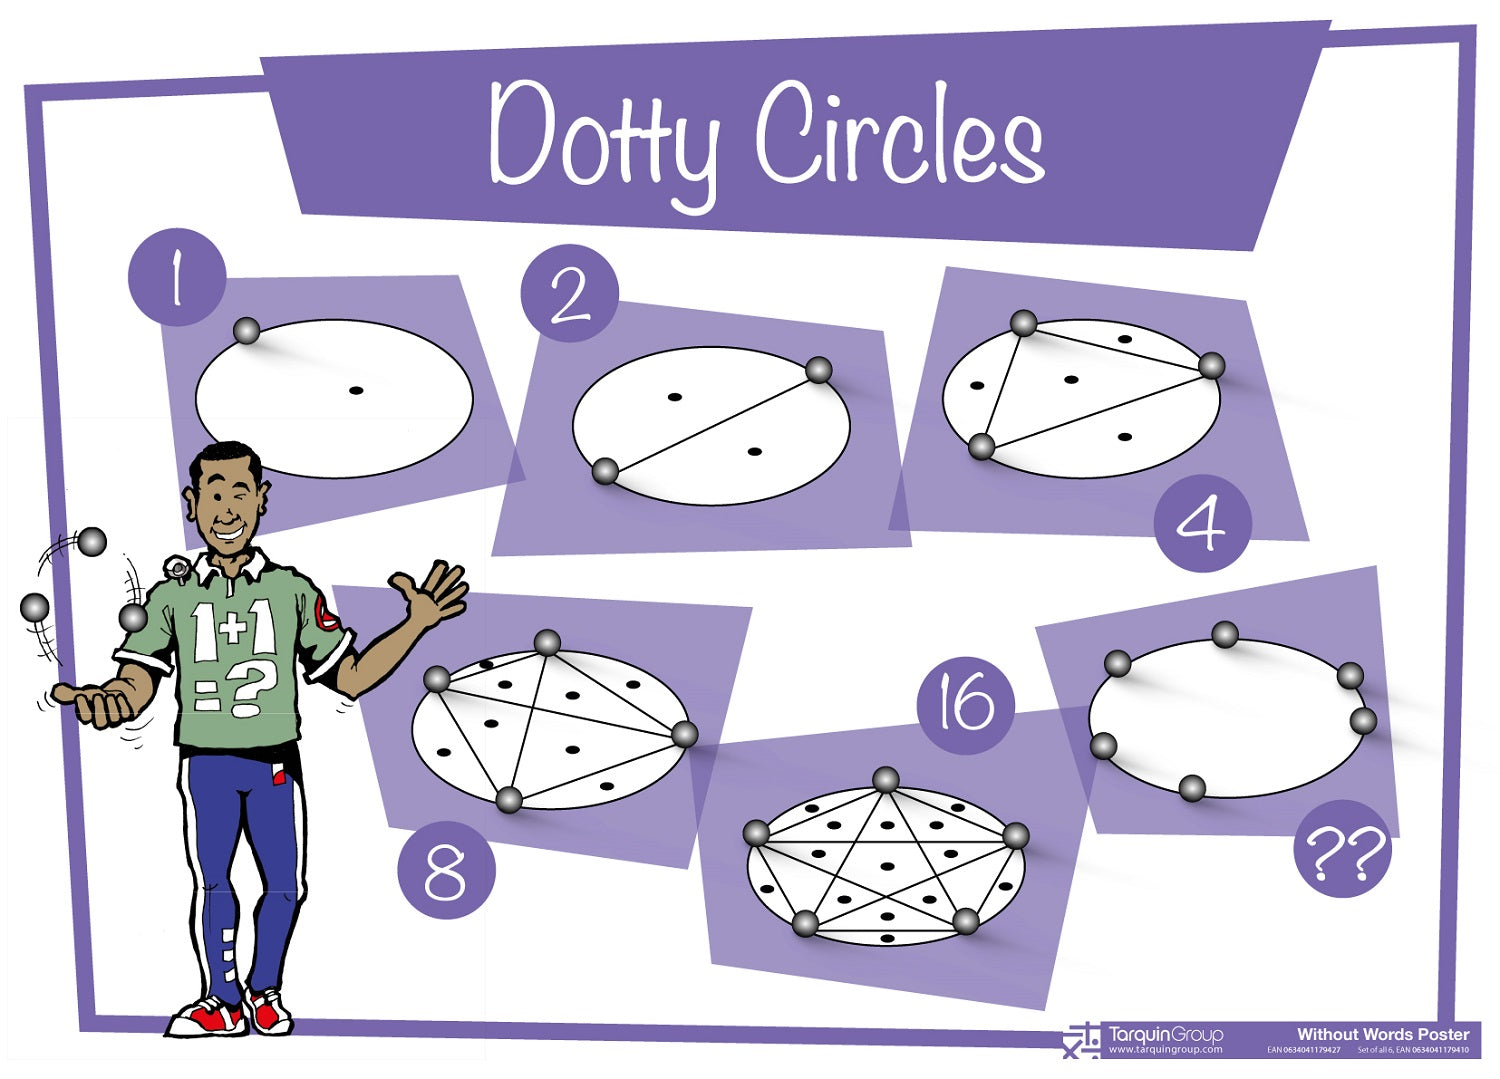 Dotty Circles